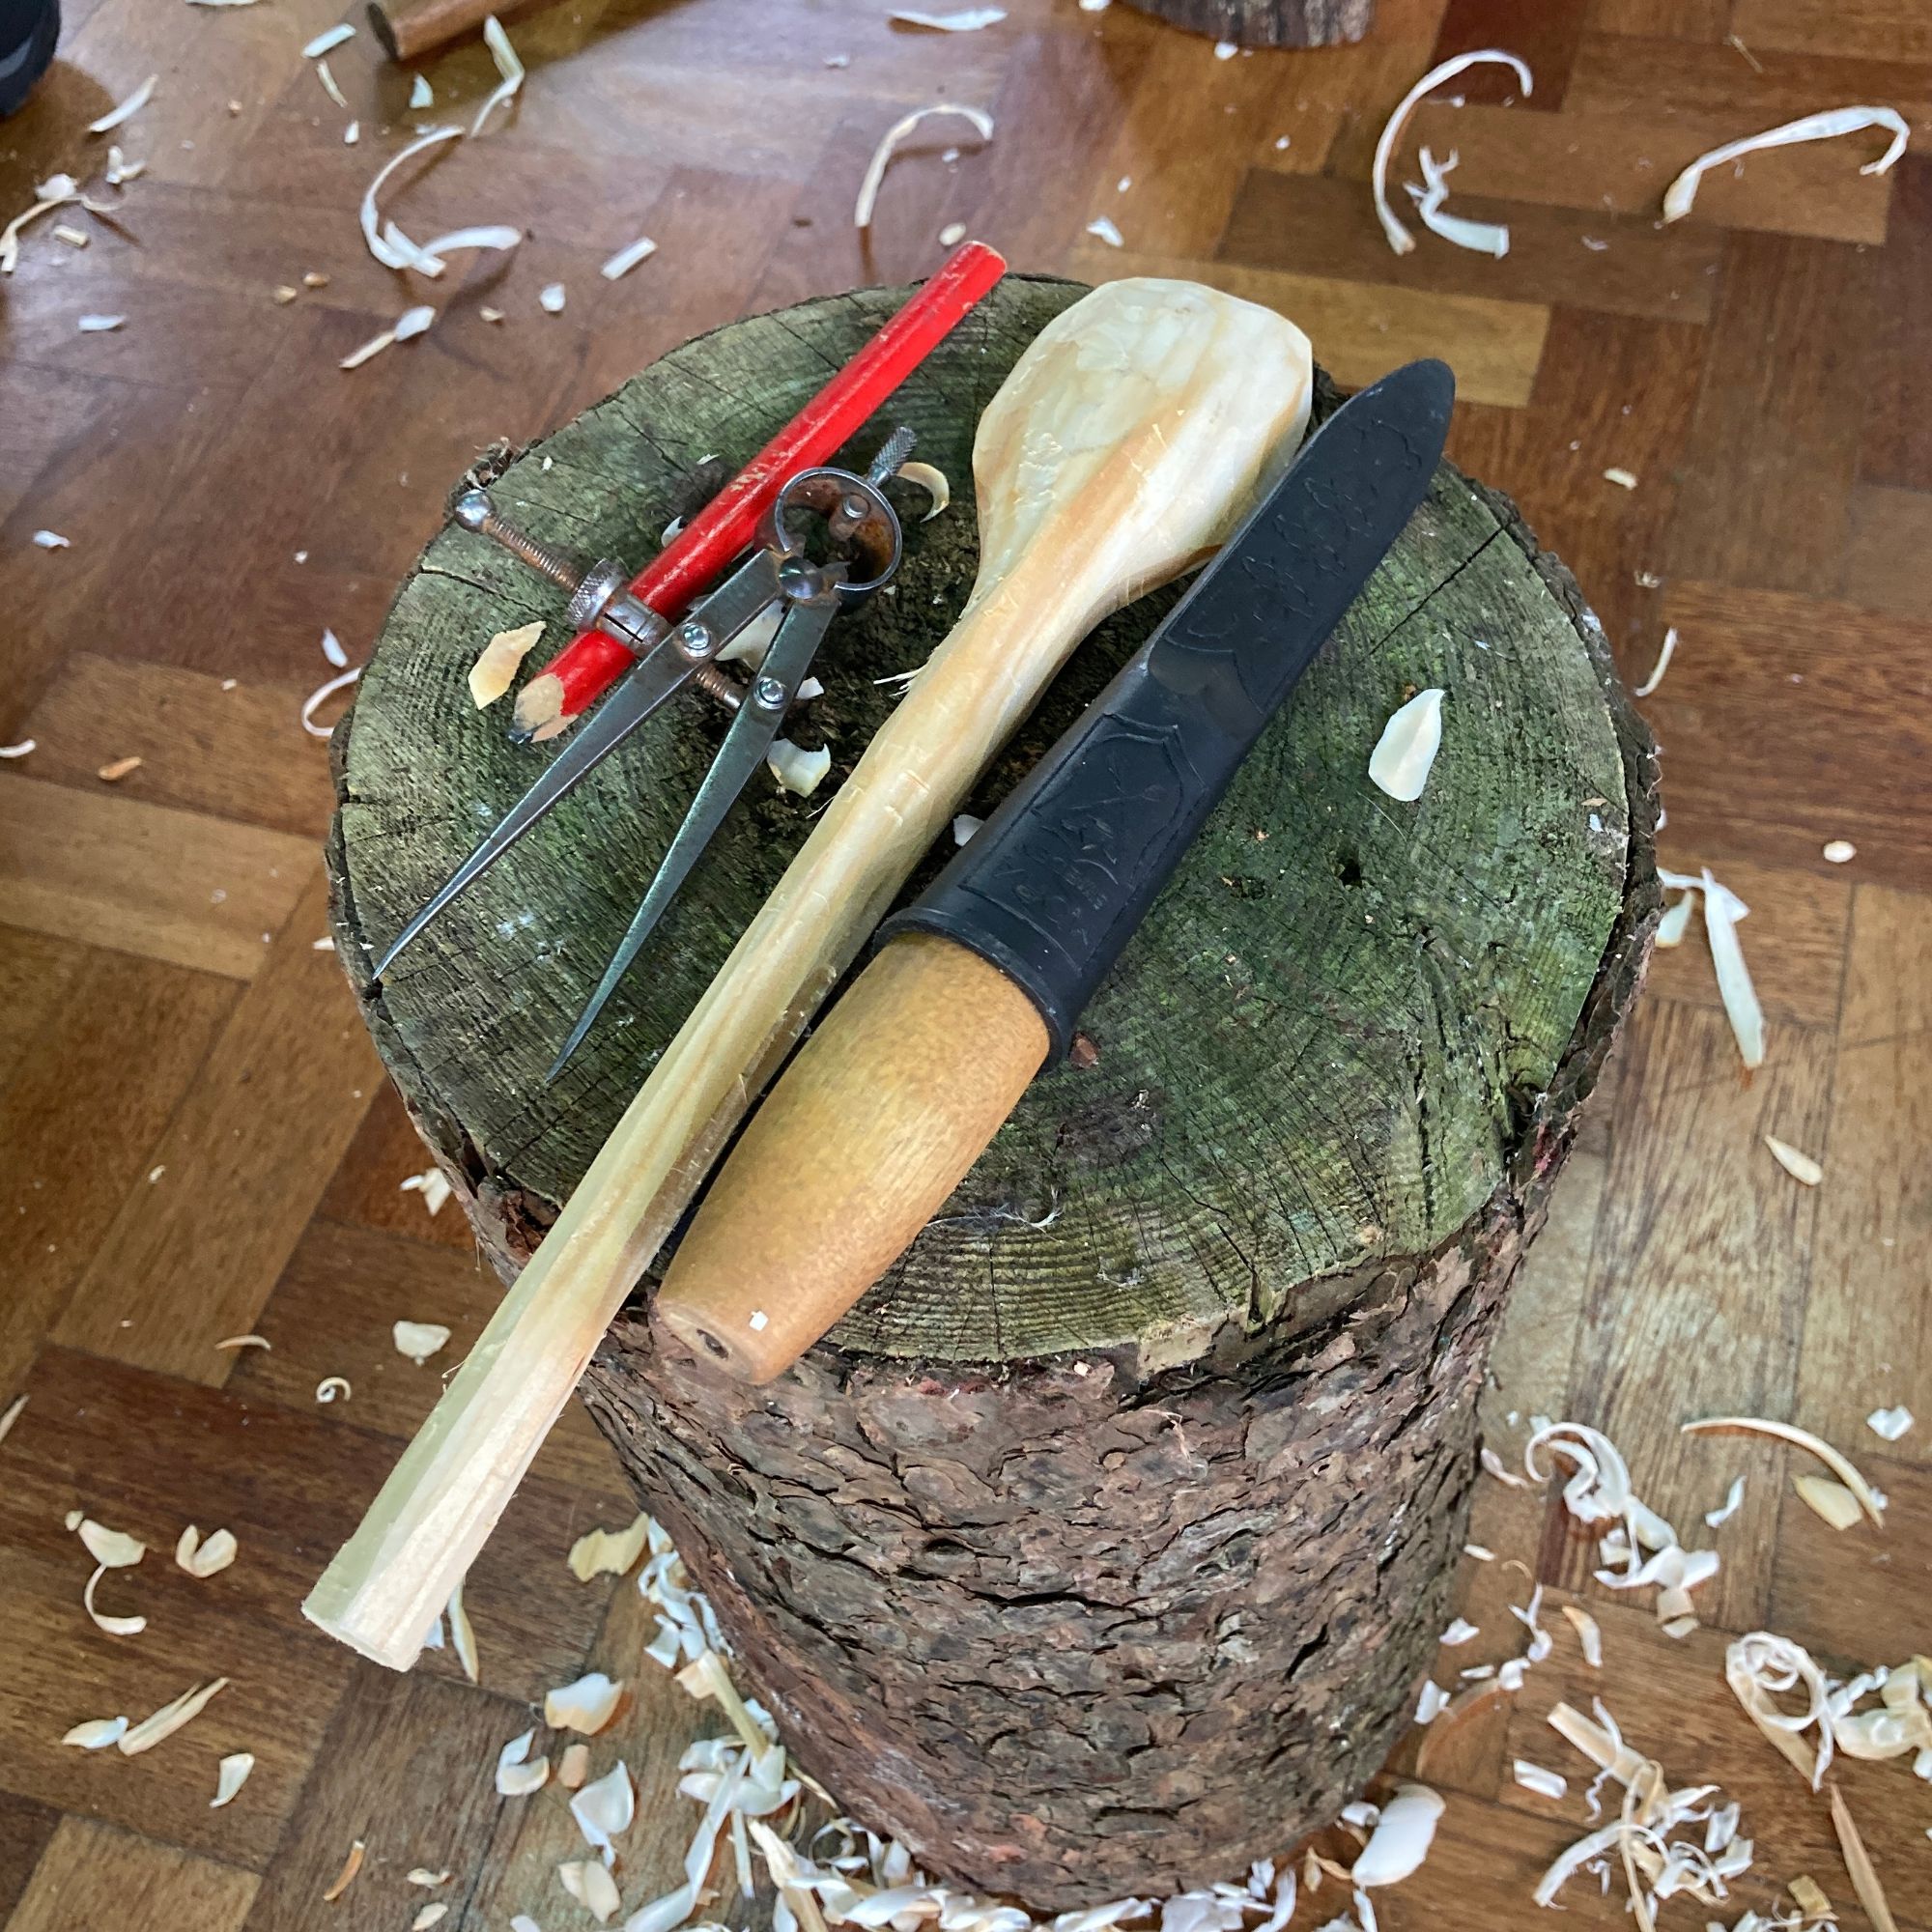 Spoon Carving Workshop - New Skills